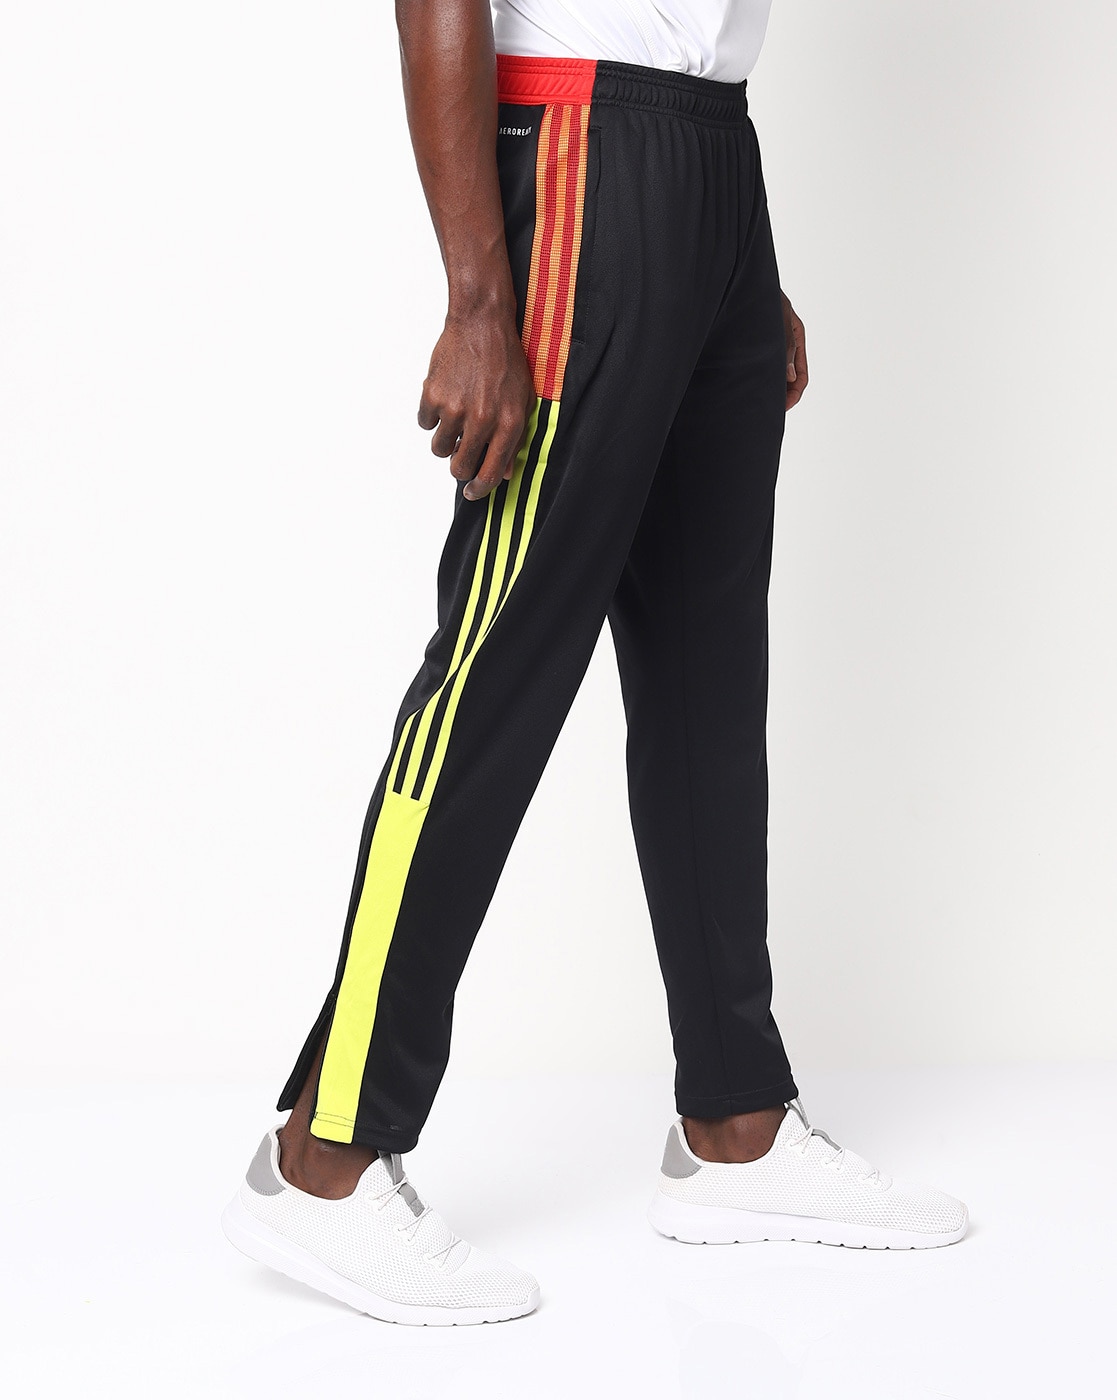 Mens Adidas Track Pants BlackRed size Small  eBay